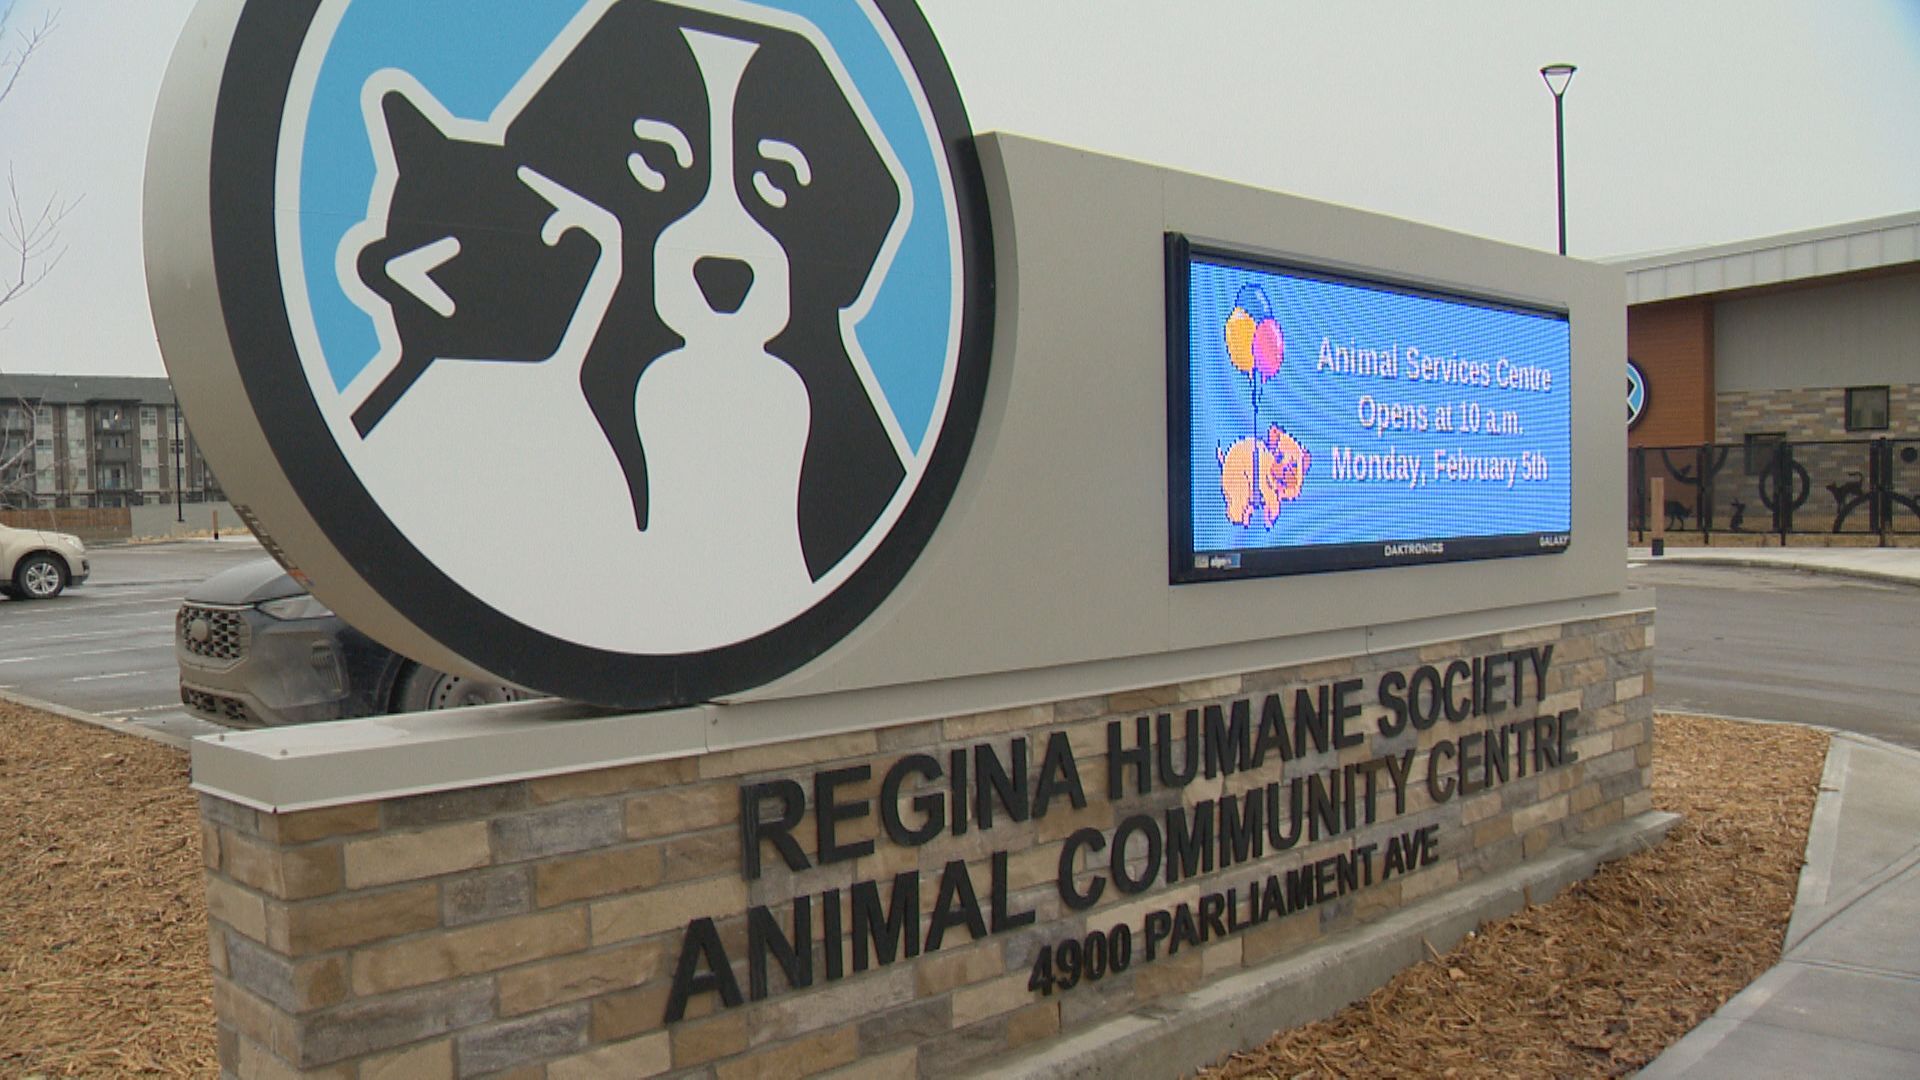 Regina Humane Society opens new animal community centre